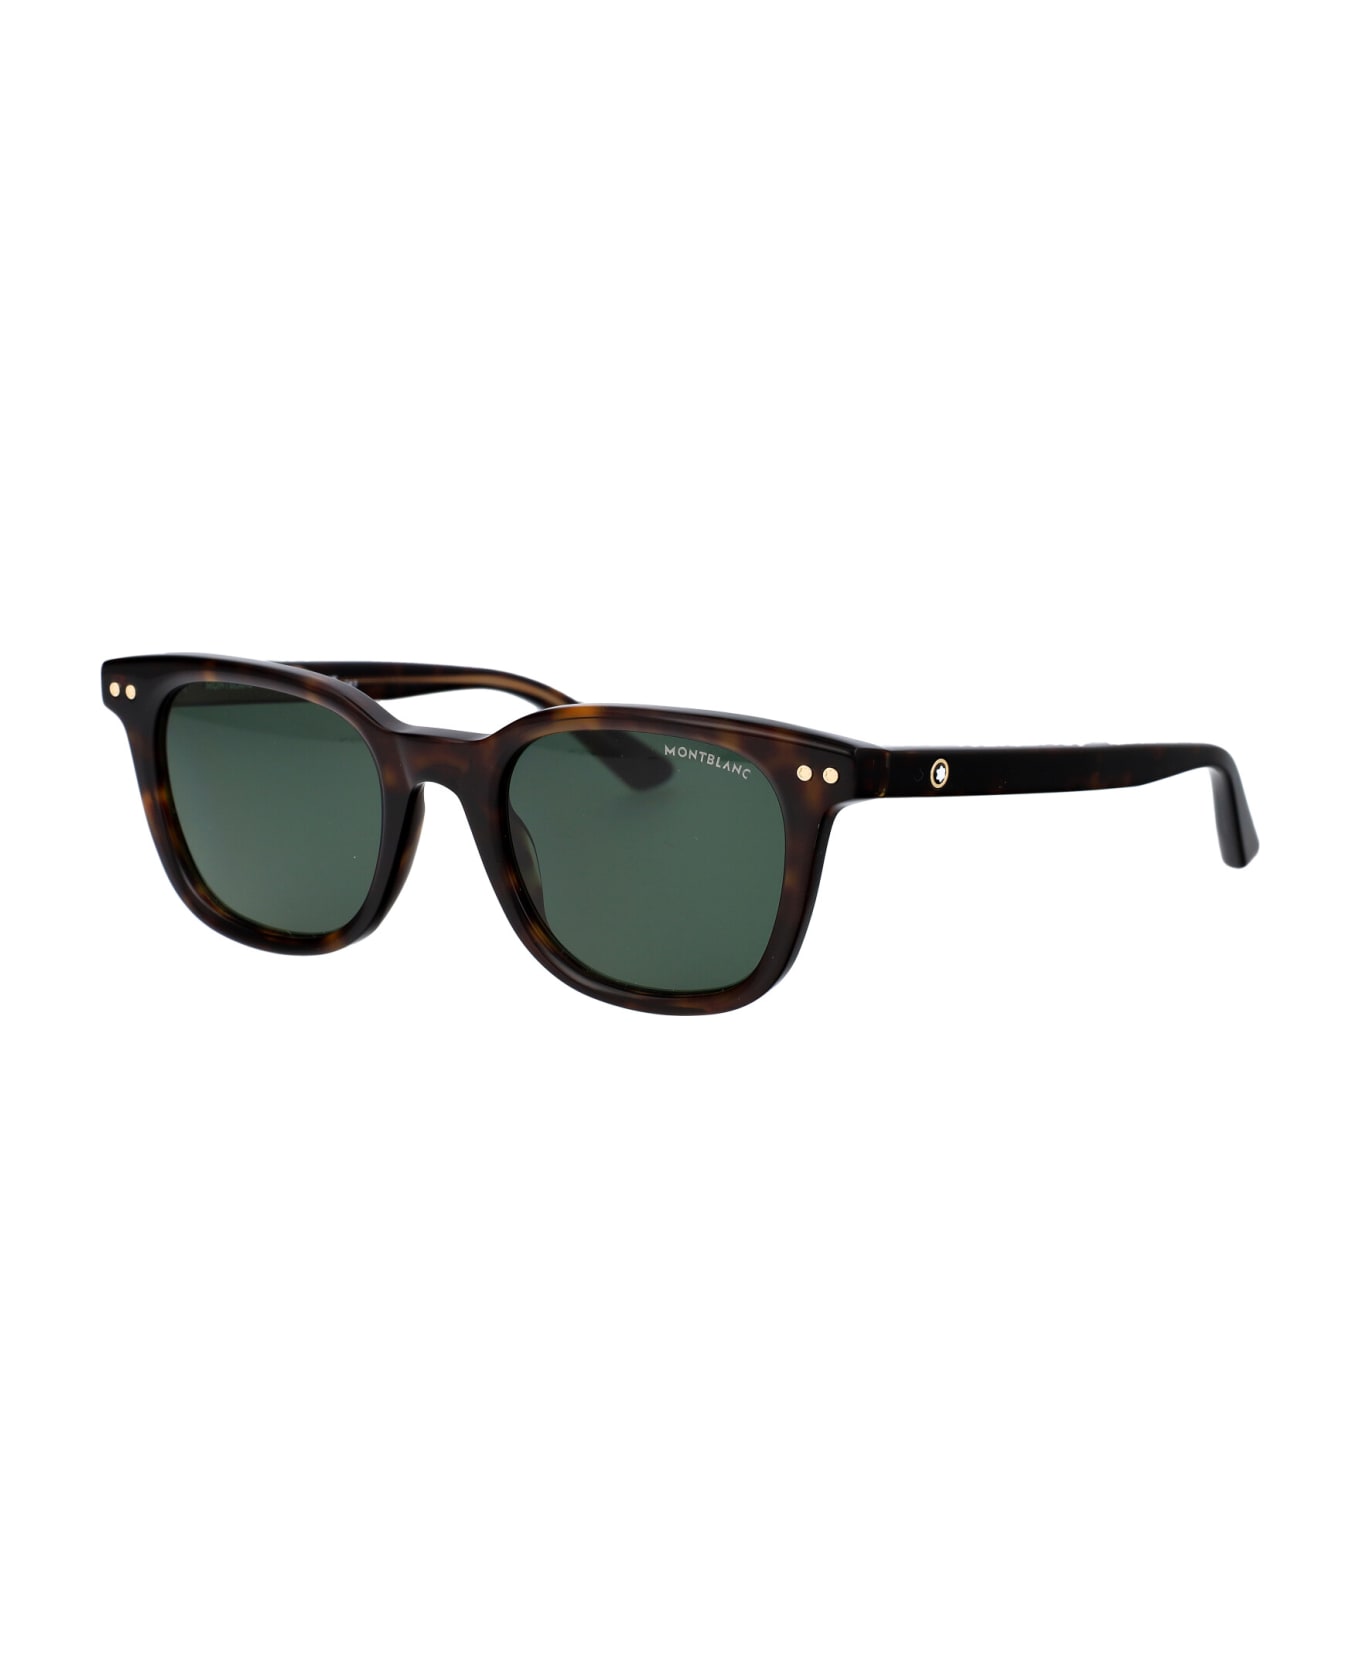 Montblanc Mb0320s Sunglasses - 002 HAVANA HAVANA GREEN